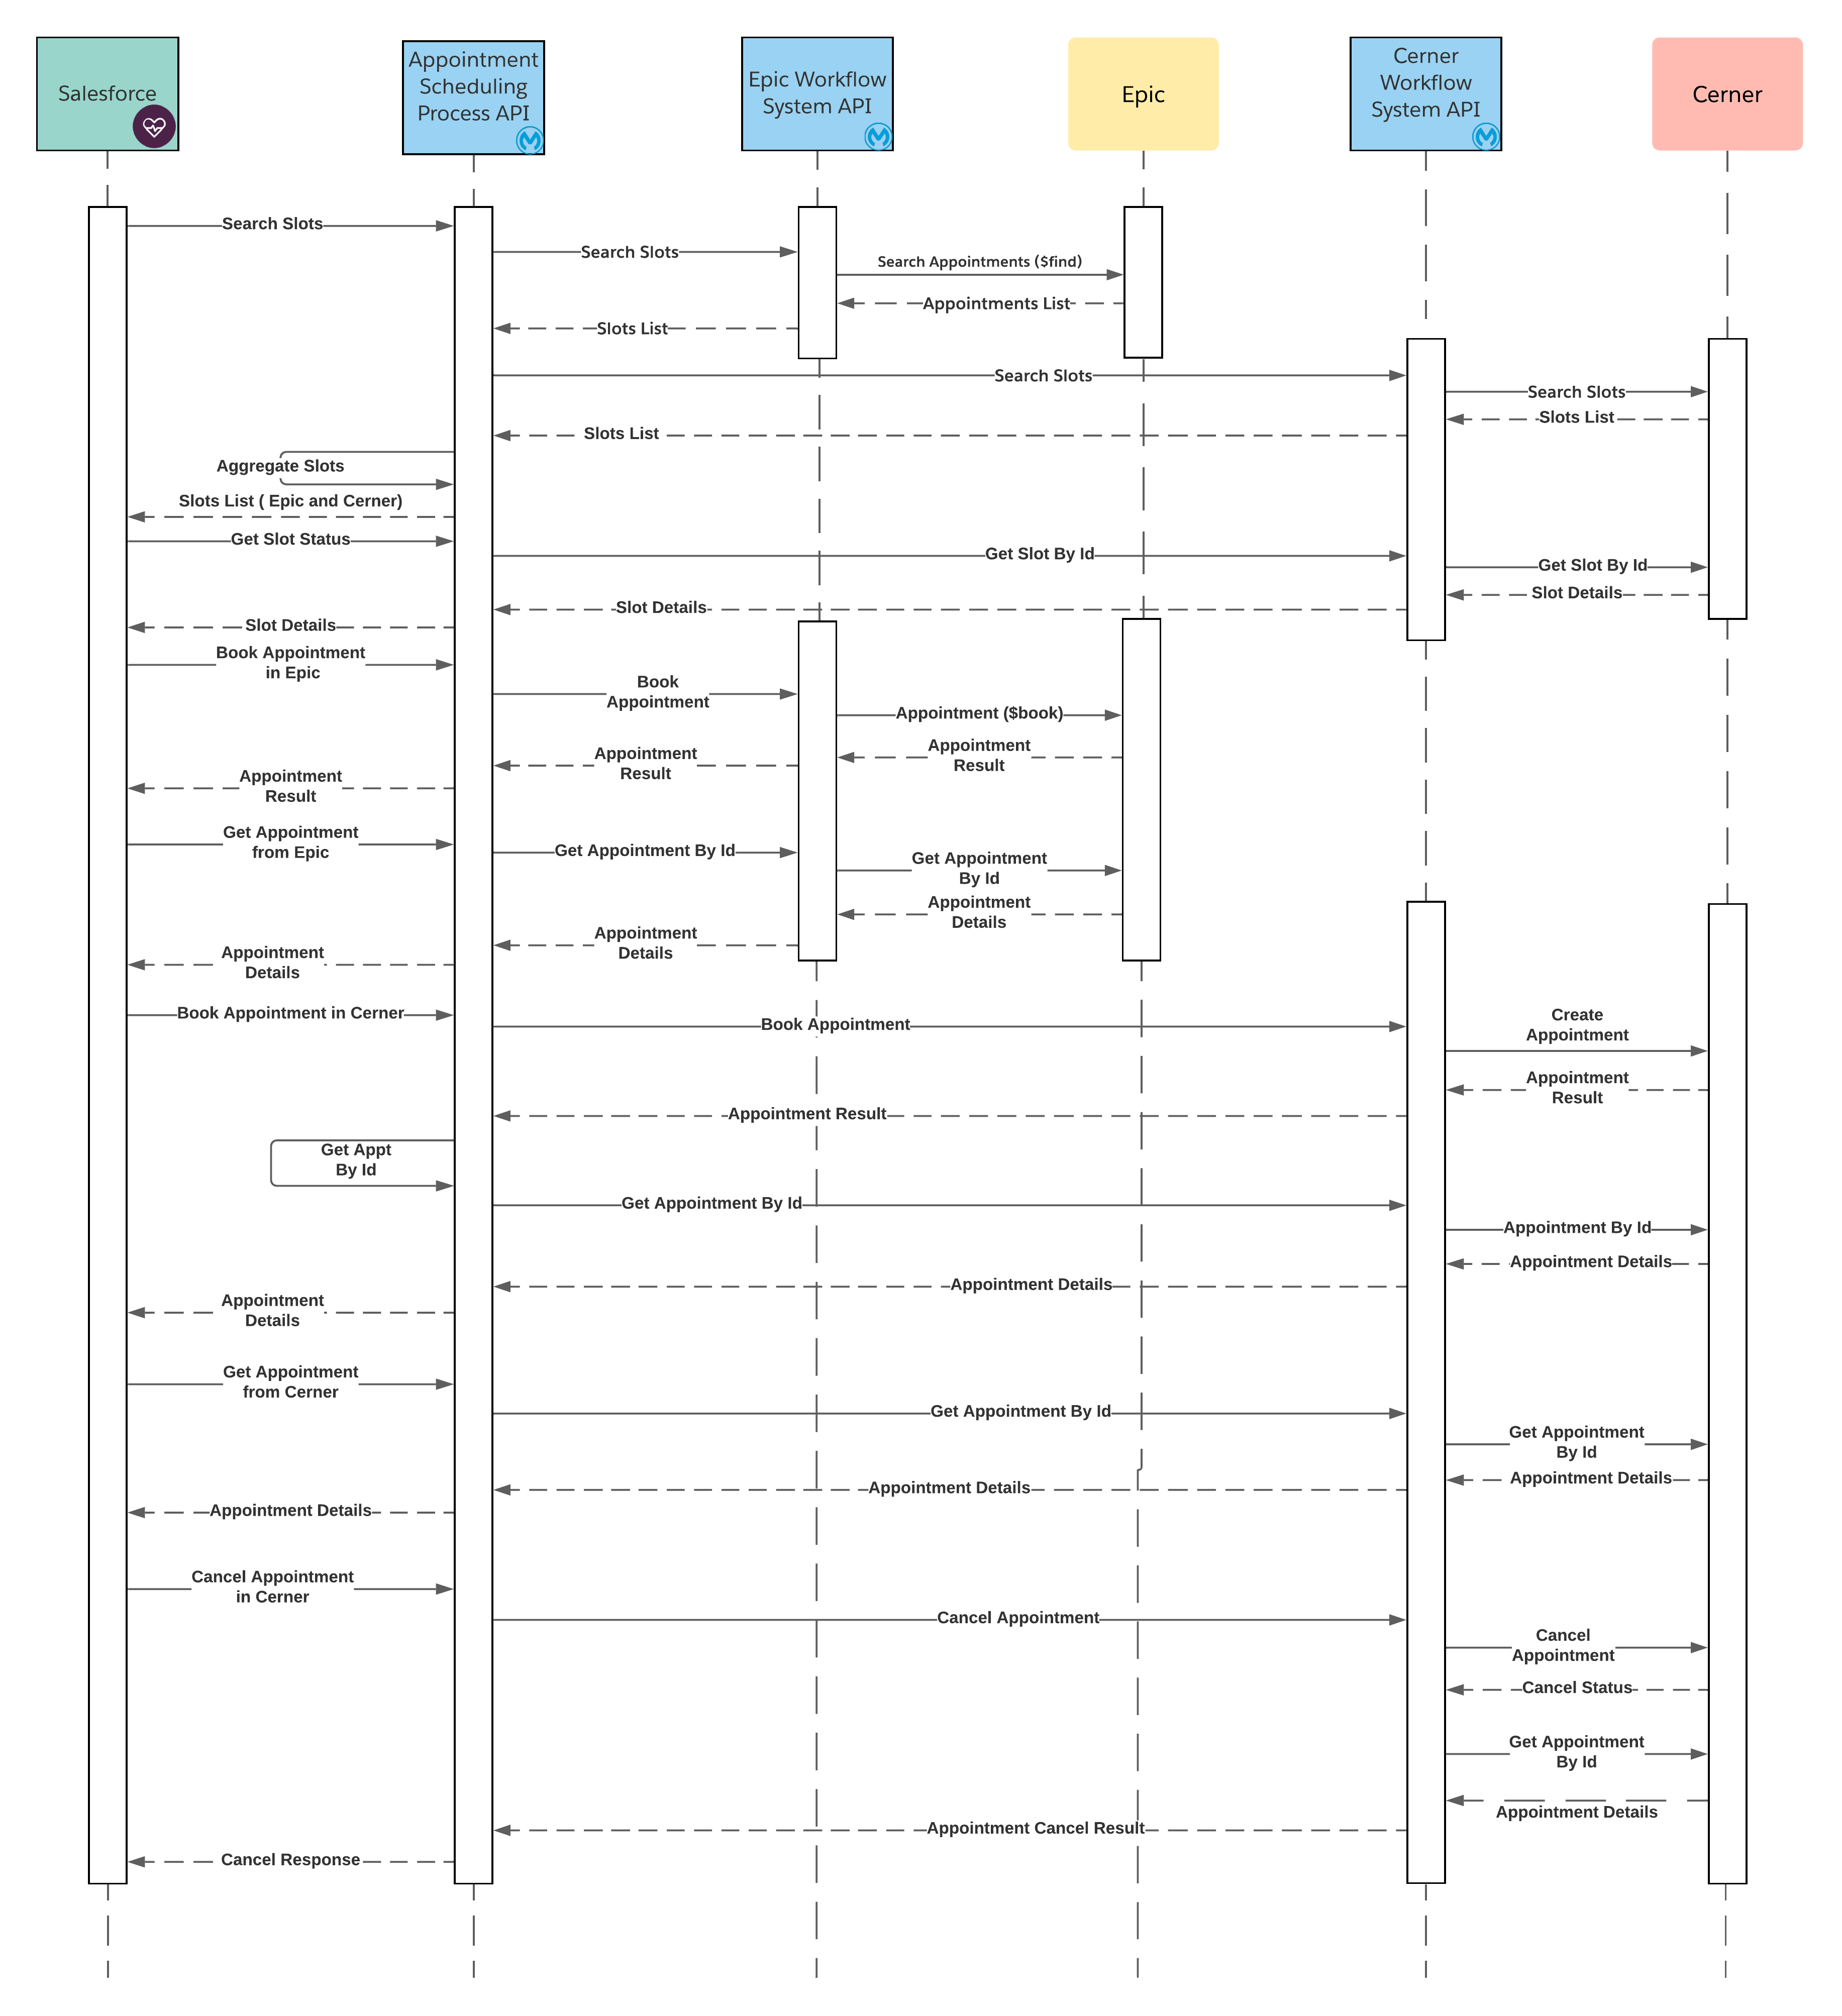 hc-appt-scheduling-seq-diagram.png